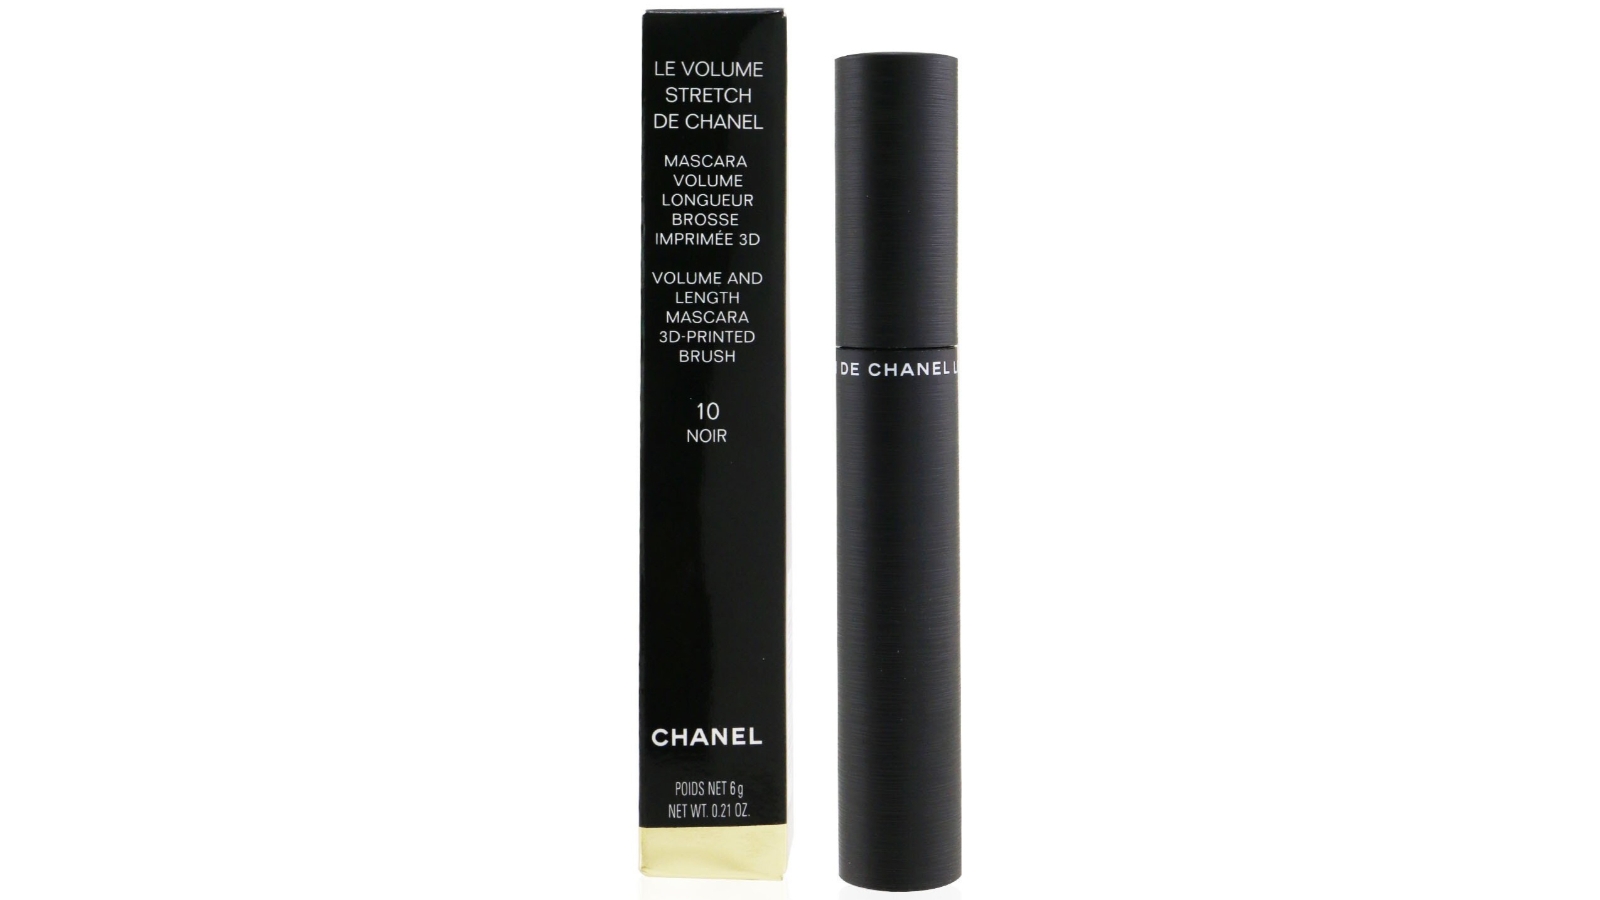 Chanel Le Volume Stretch - 10 Noir (6g) desde 34,00 €